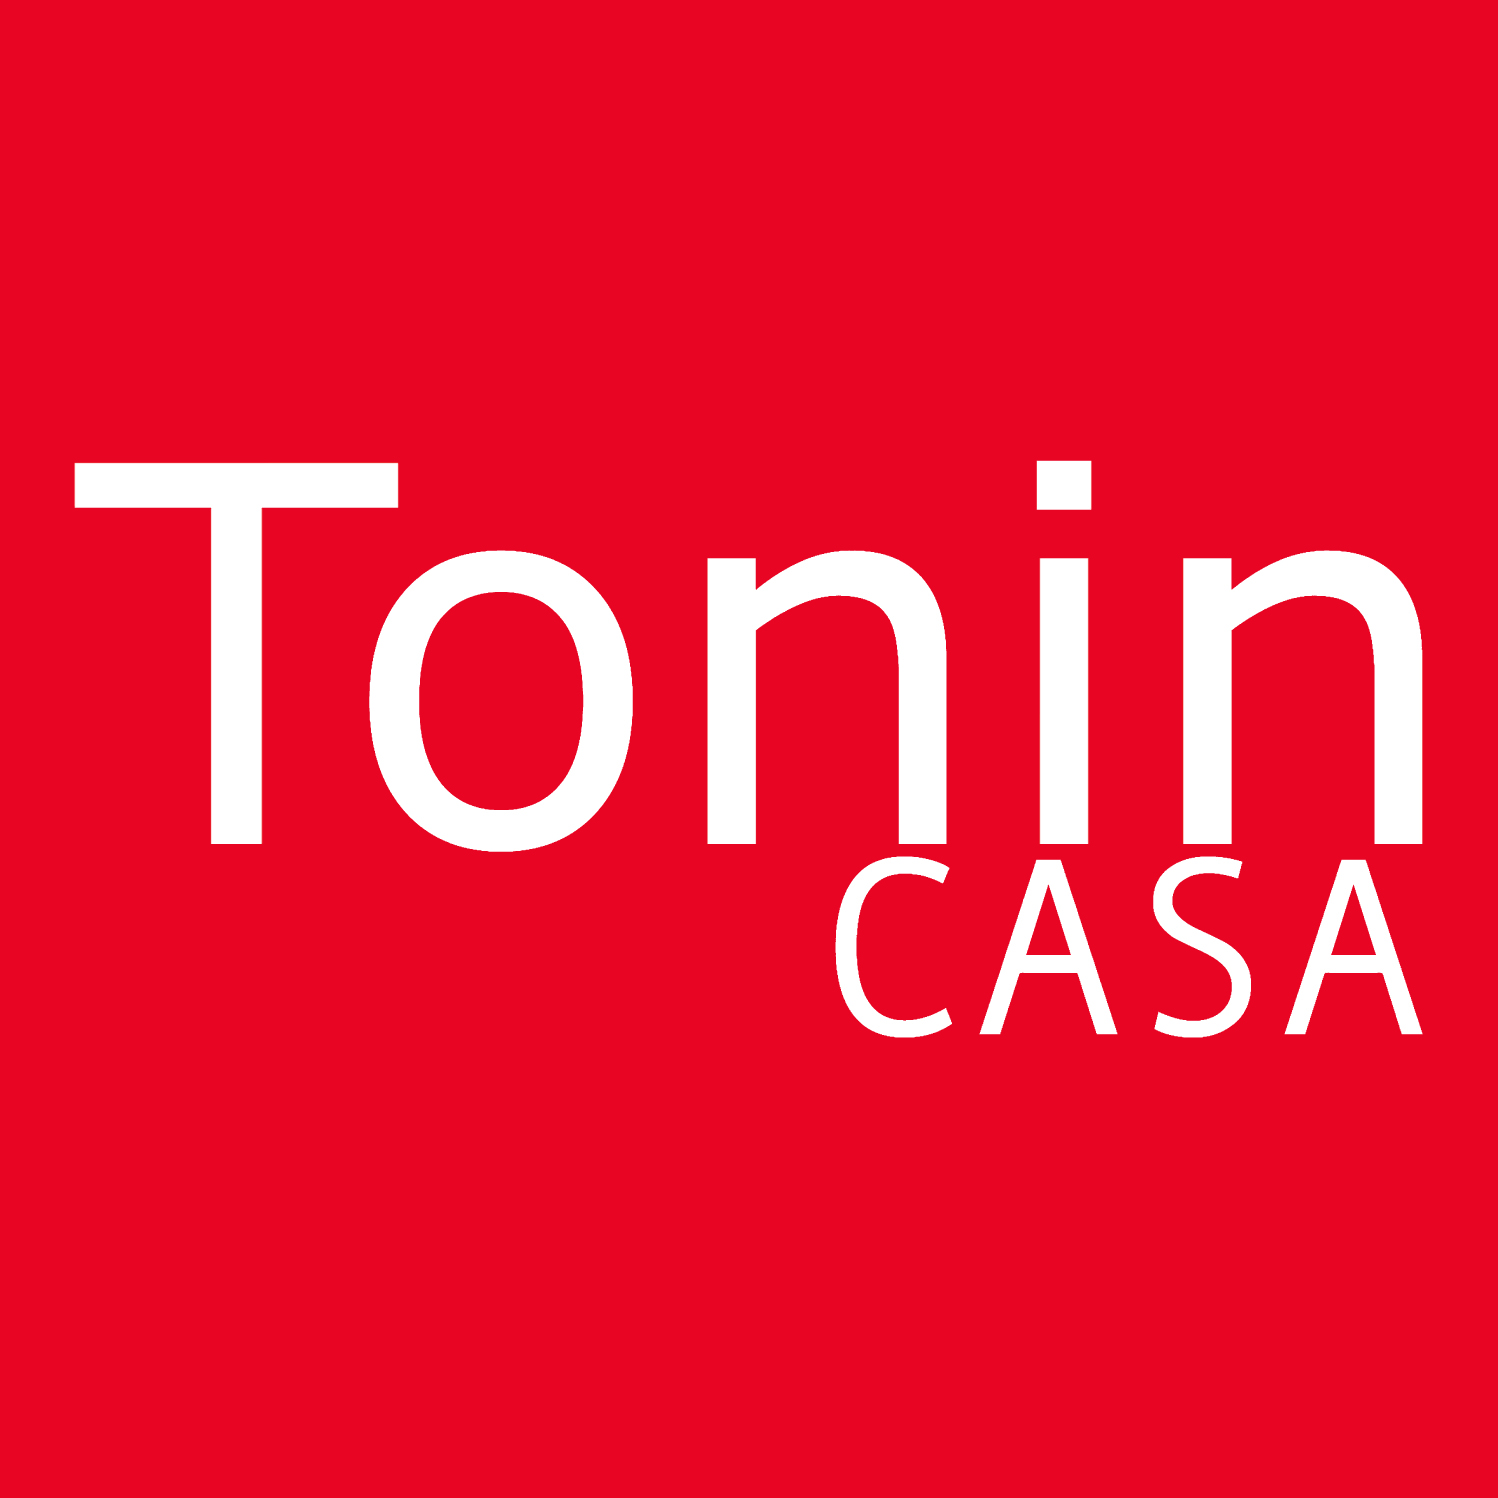 About Tonin Casa